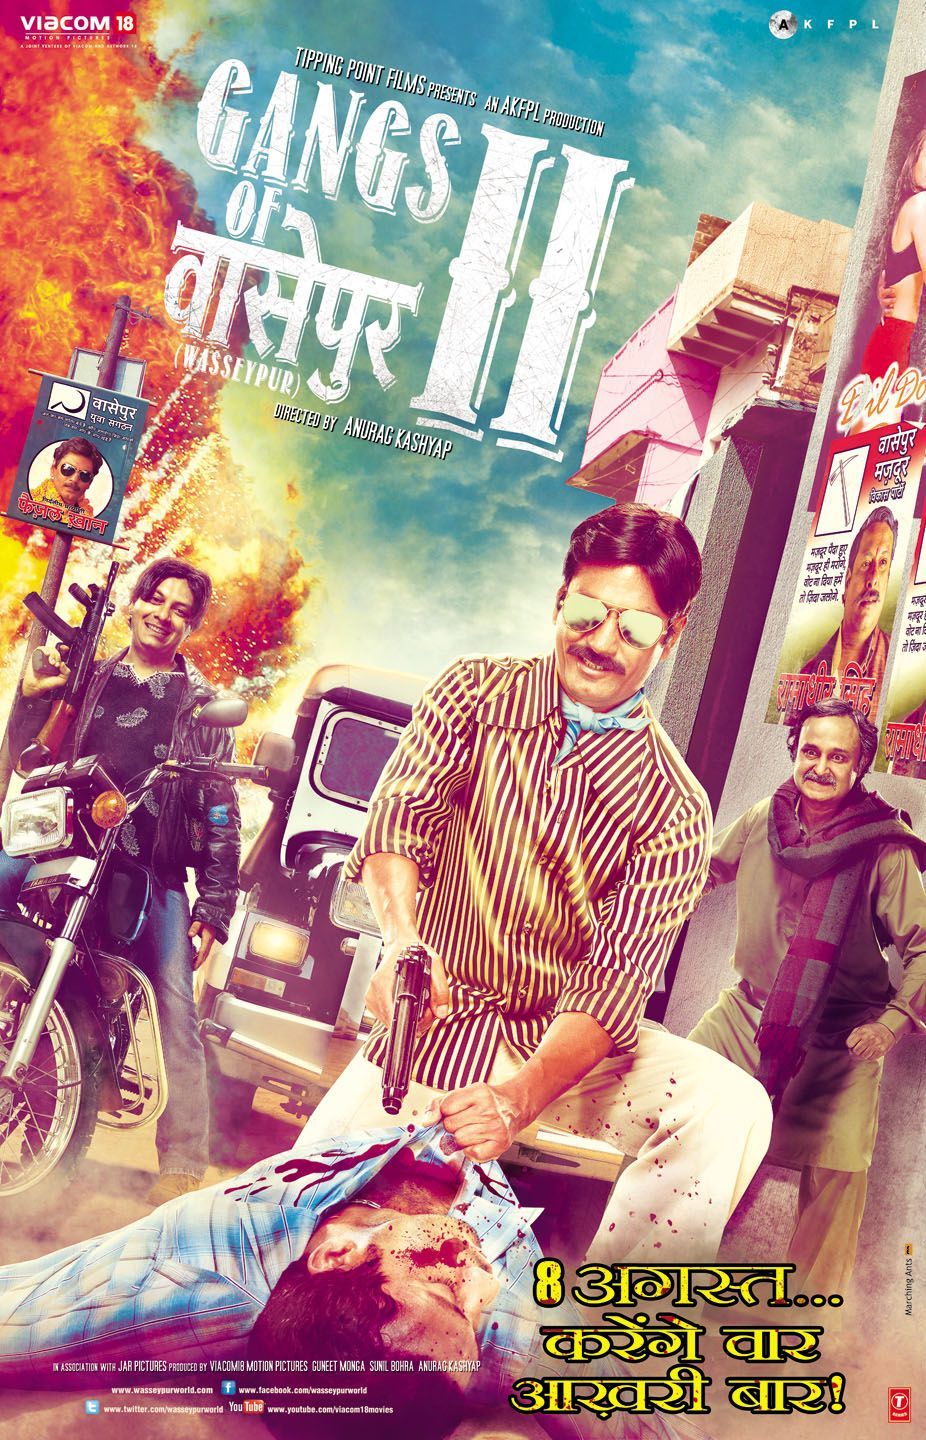 Gangs of Wasseypur 2. Hindi movies, Download movies